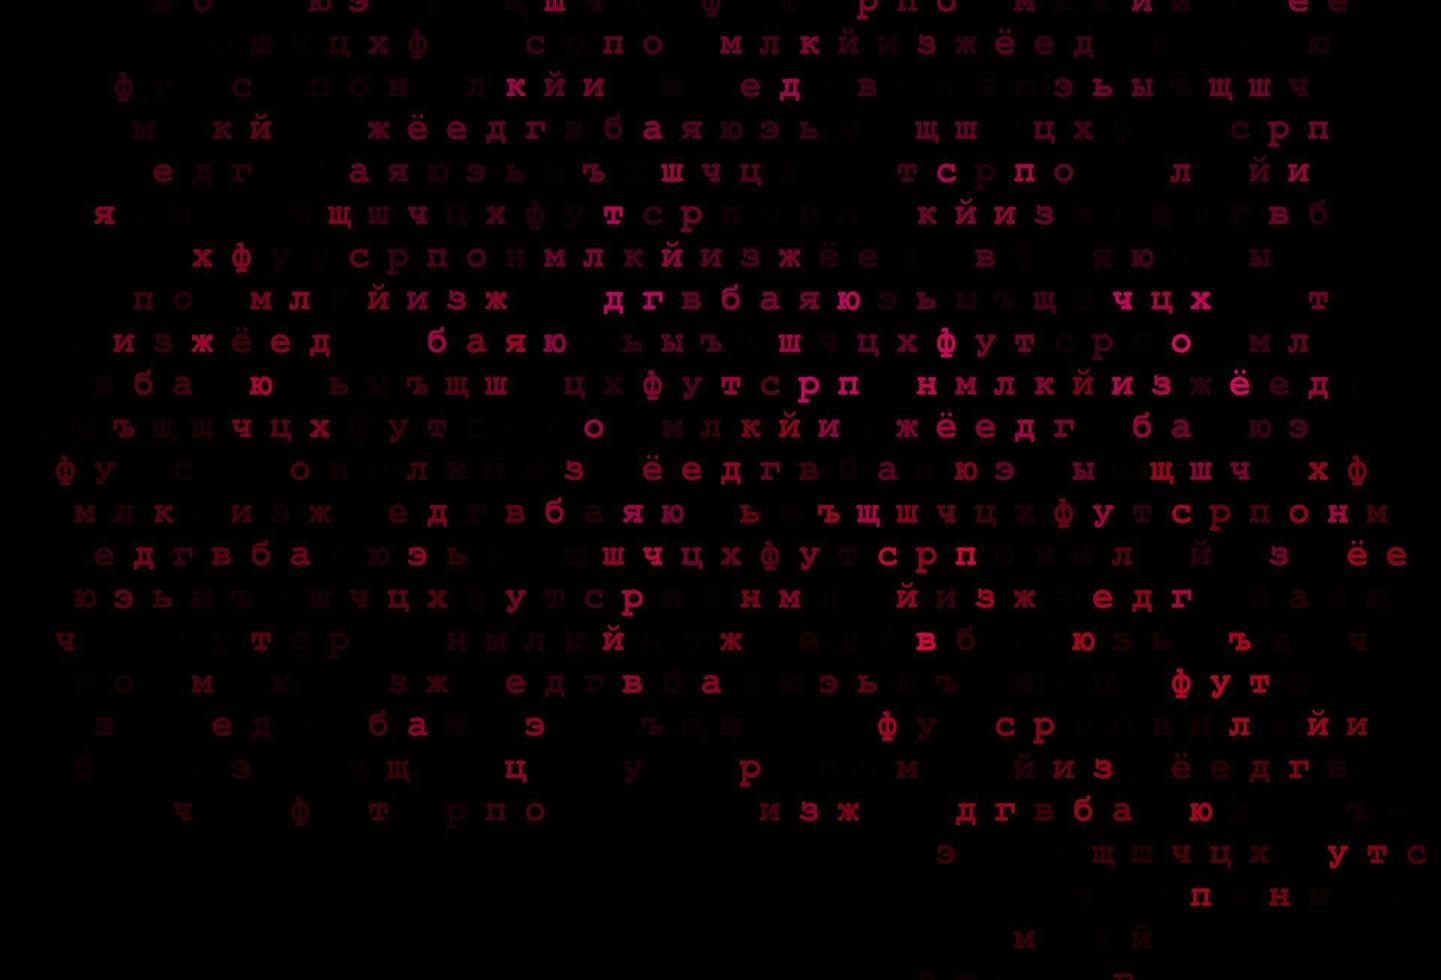 Dark pink vector pattern with ABC symbols.